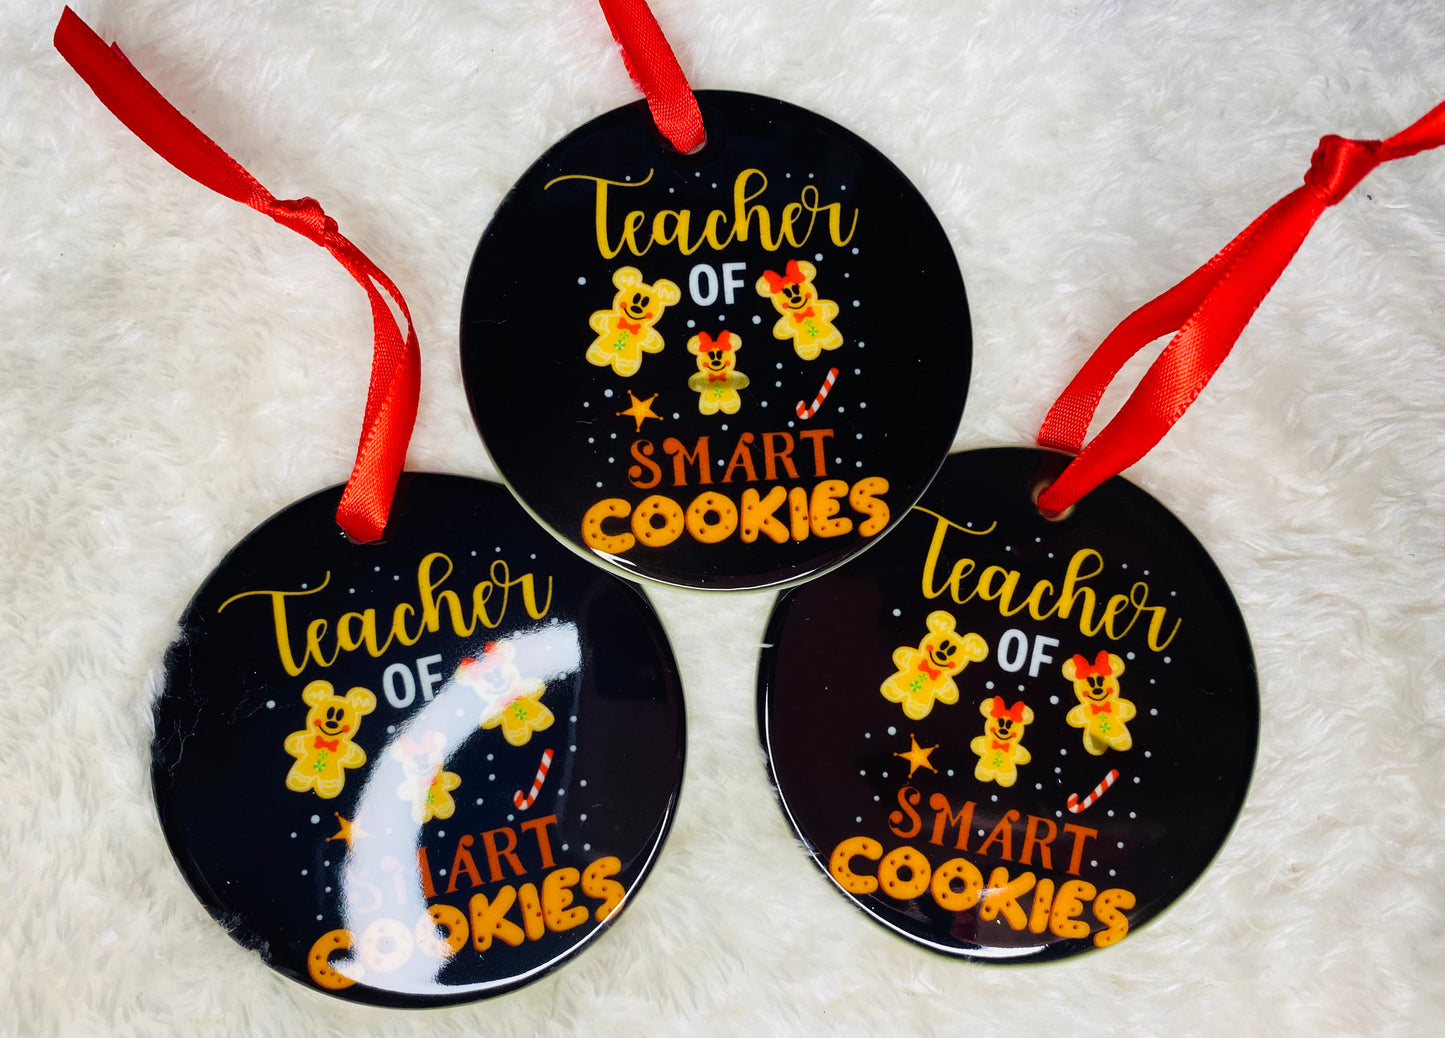 "Teacher of Smart Cookies" Ceramic Ornament